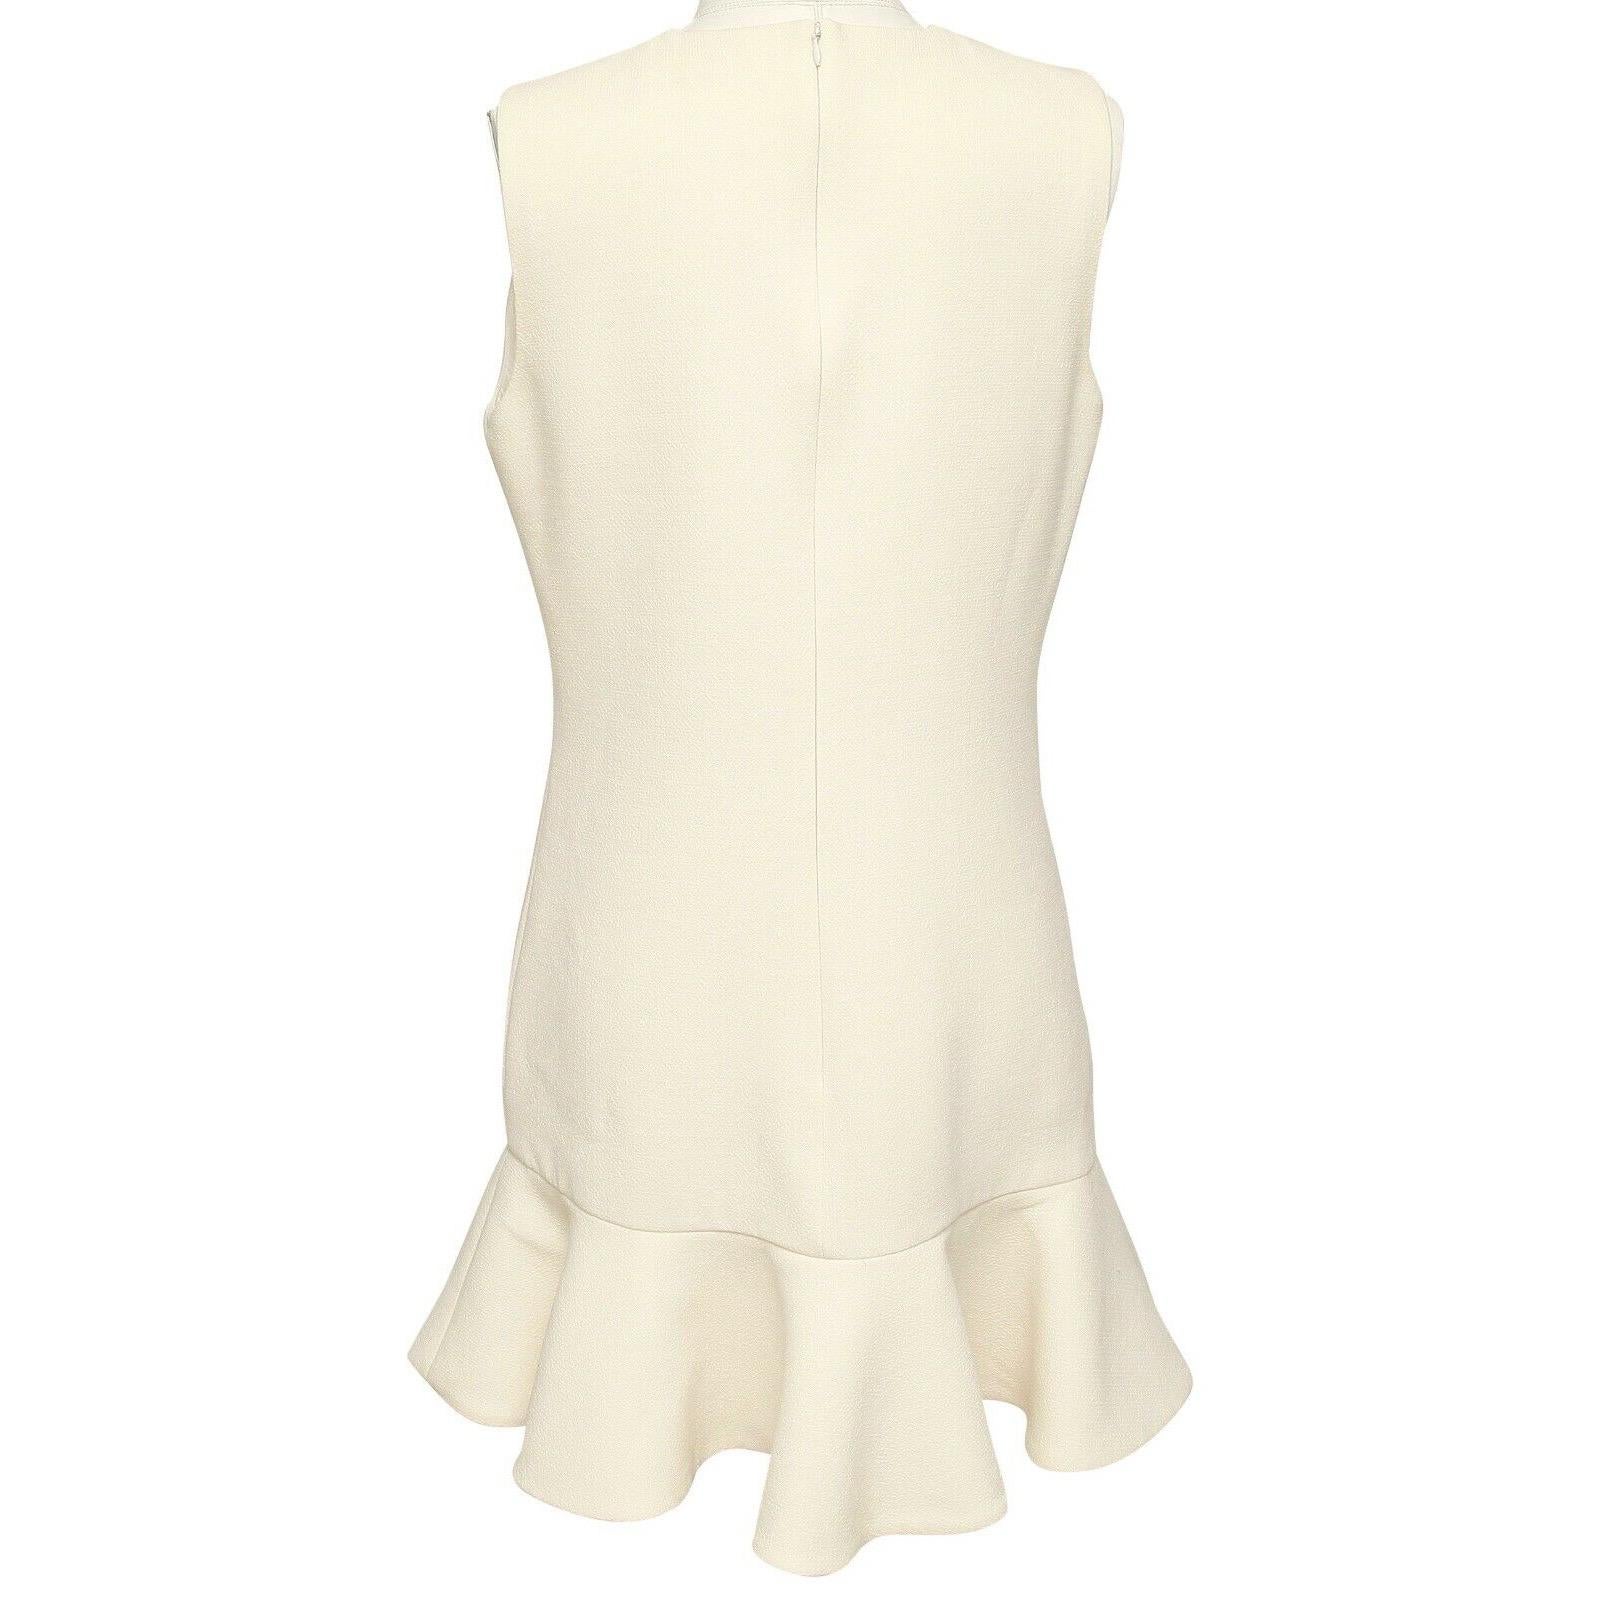 VICTORIA VICTORIA BECKHAM Ivory Dress Sleeveless Wool Crepe Flared Sz M For Sale 3